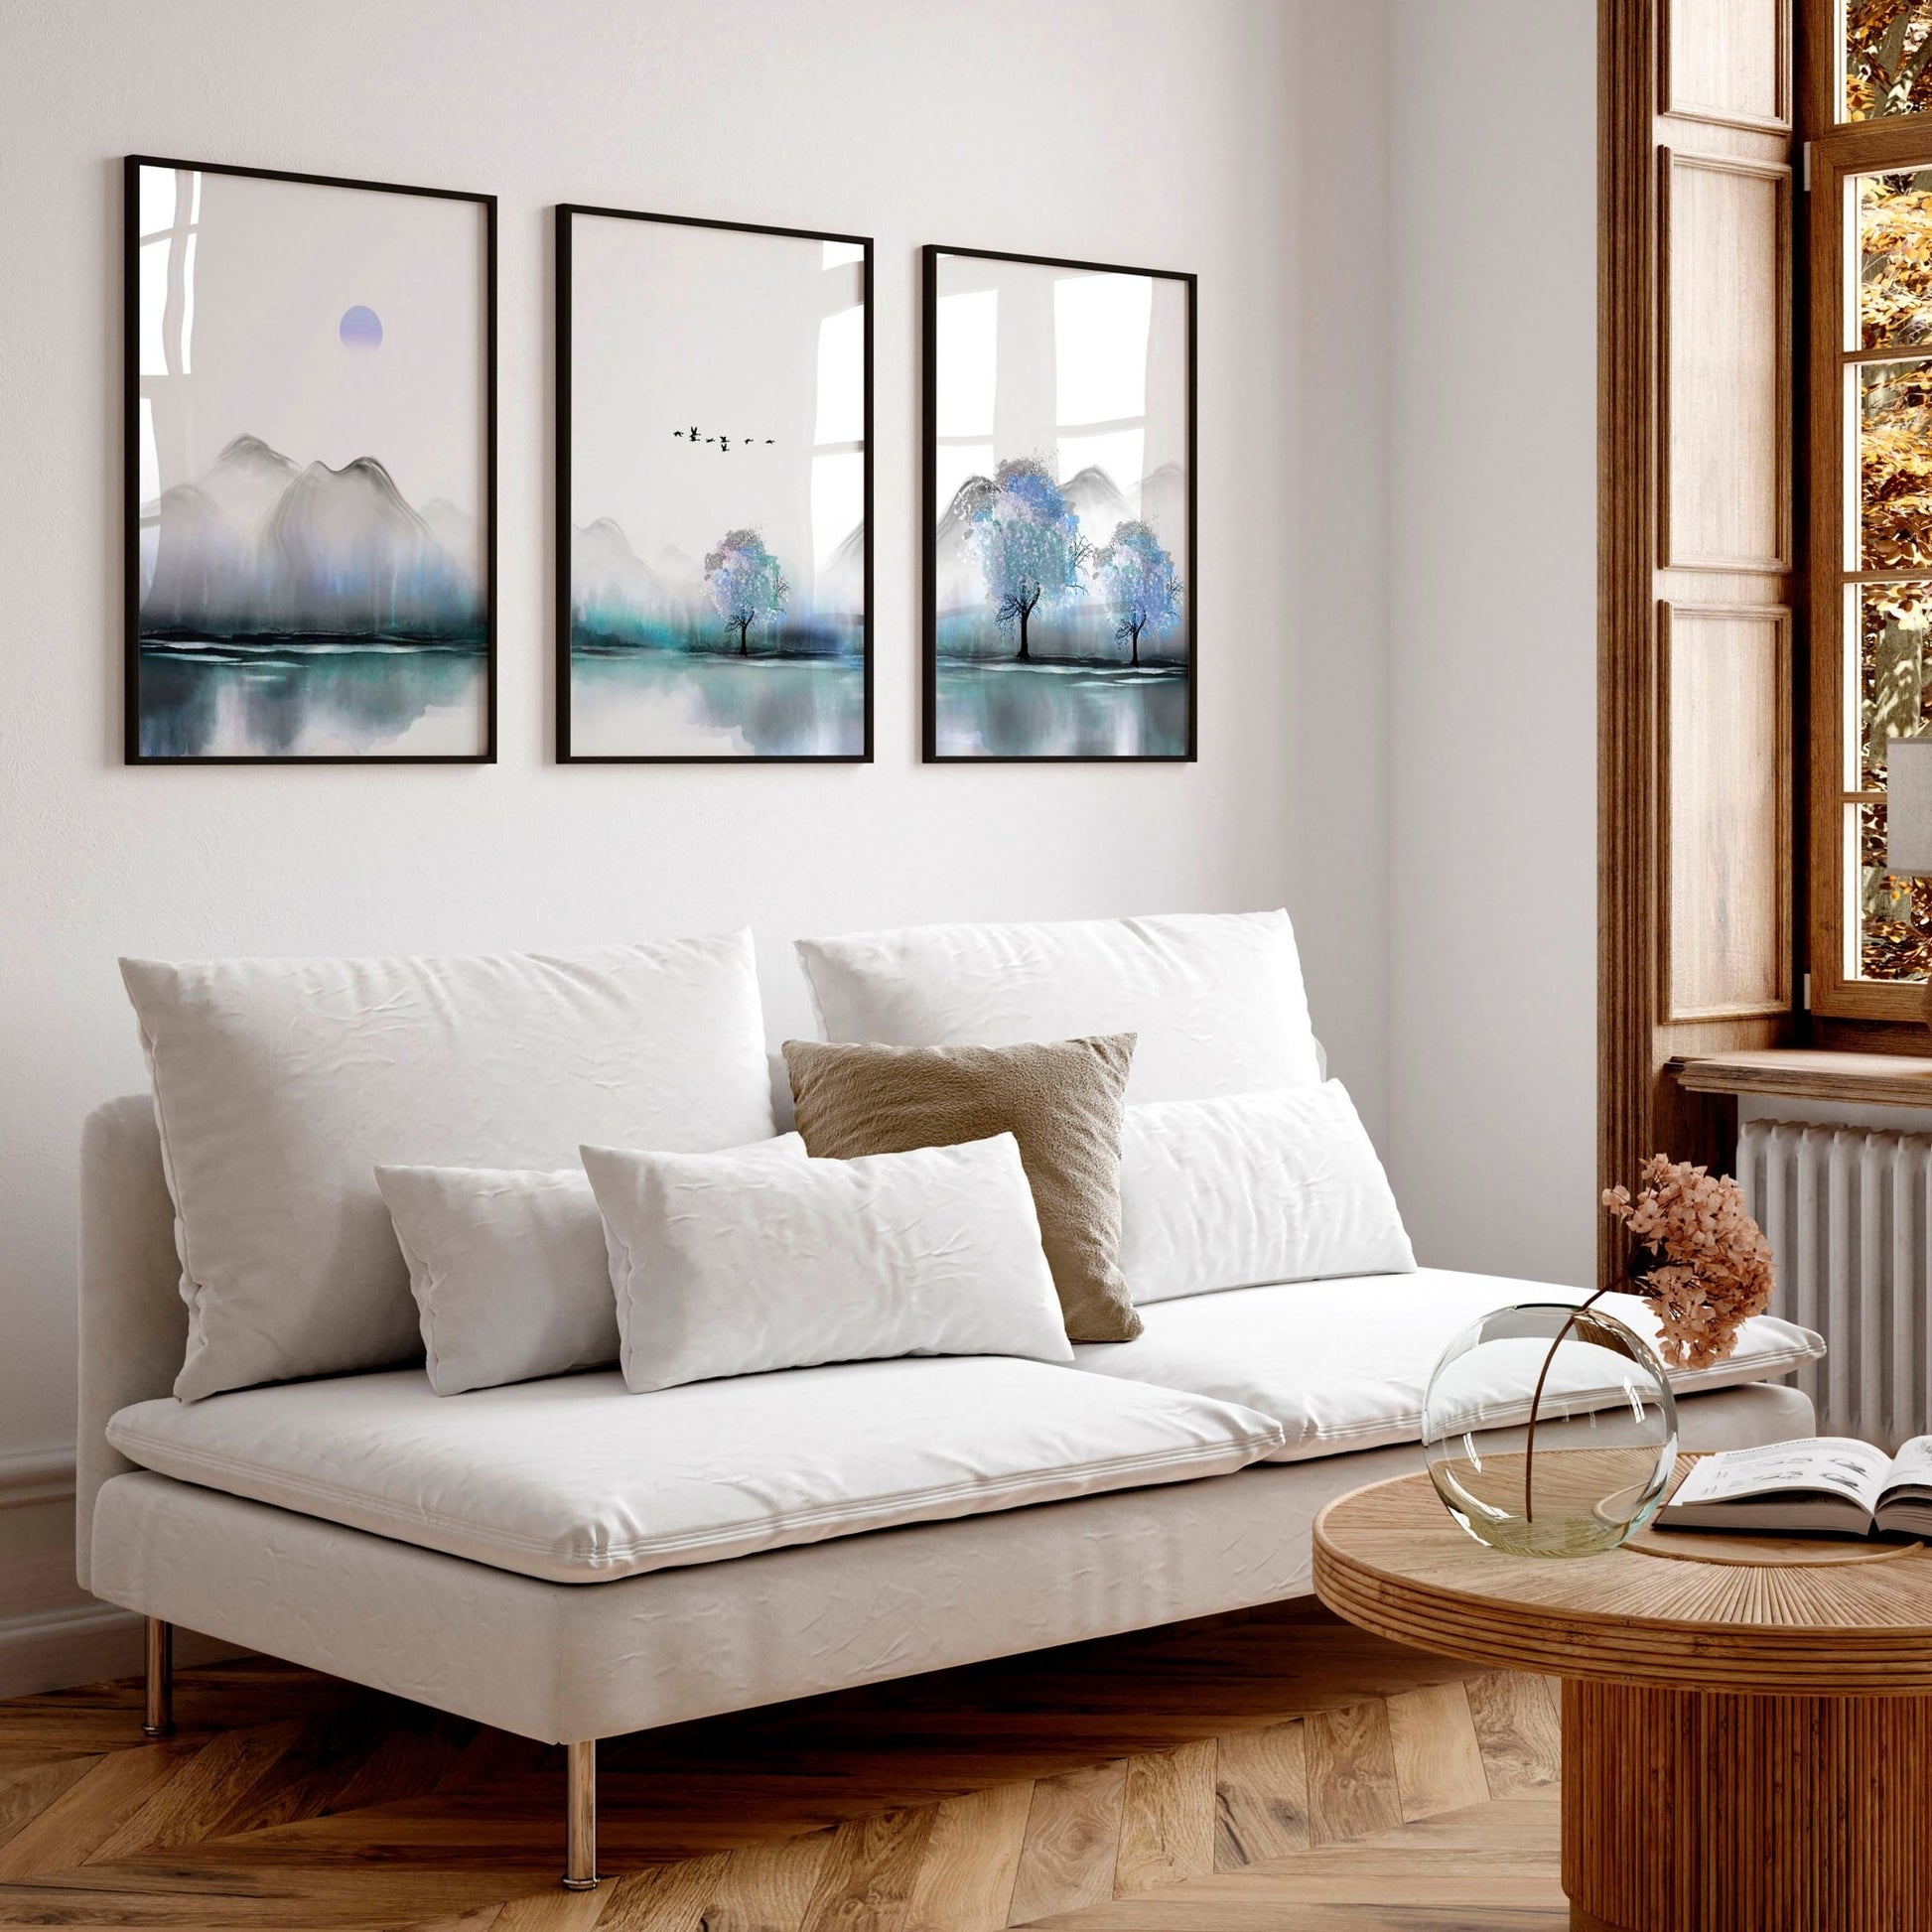 Zen Landscape art for living room walls | set of 3 art prints - About Wall Art